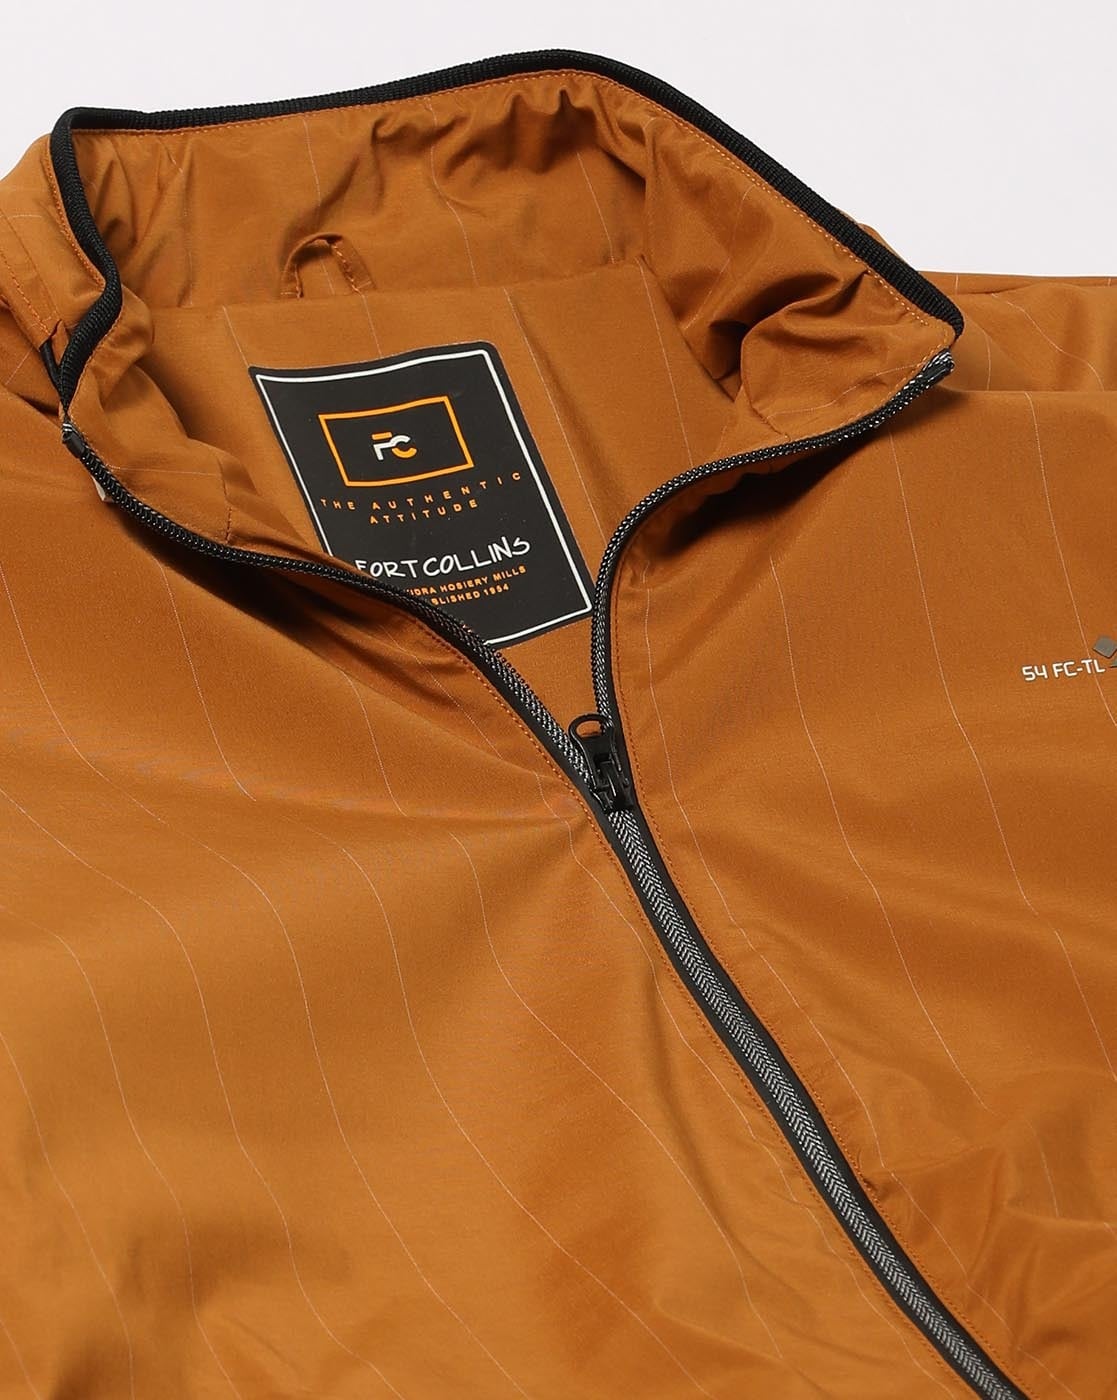 Fort Collins Lightweight Zip-Front Hooded Bomber Jacket For Women (Orange, L)